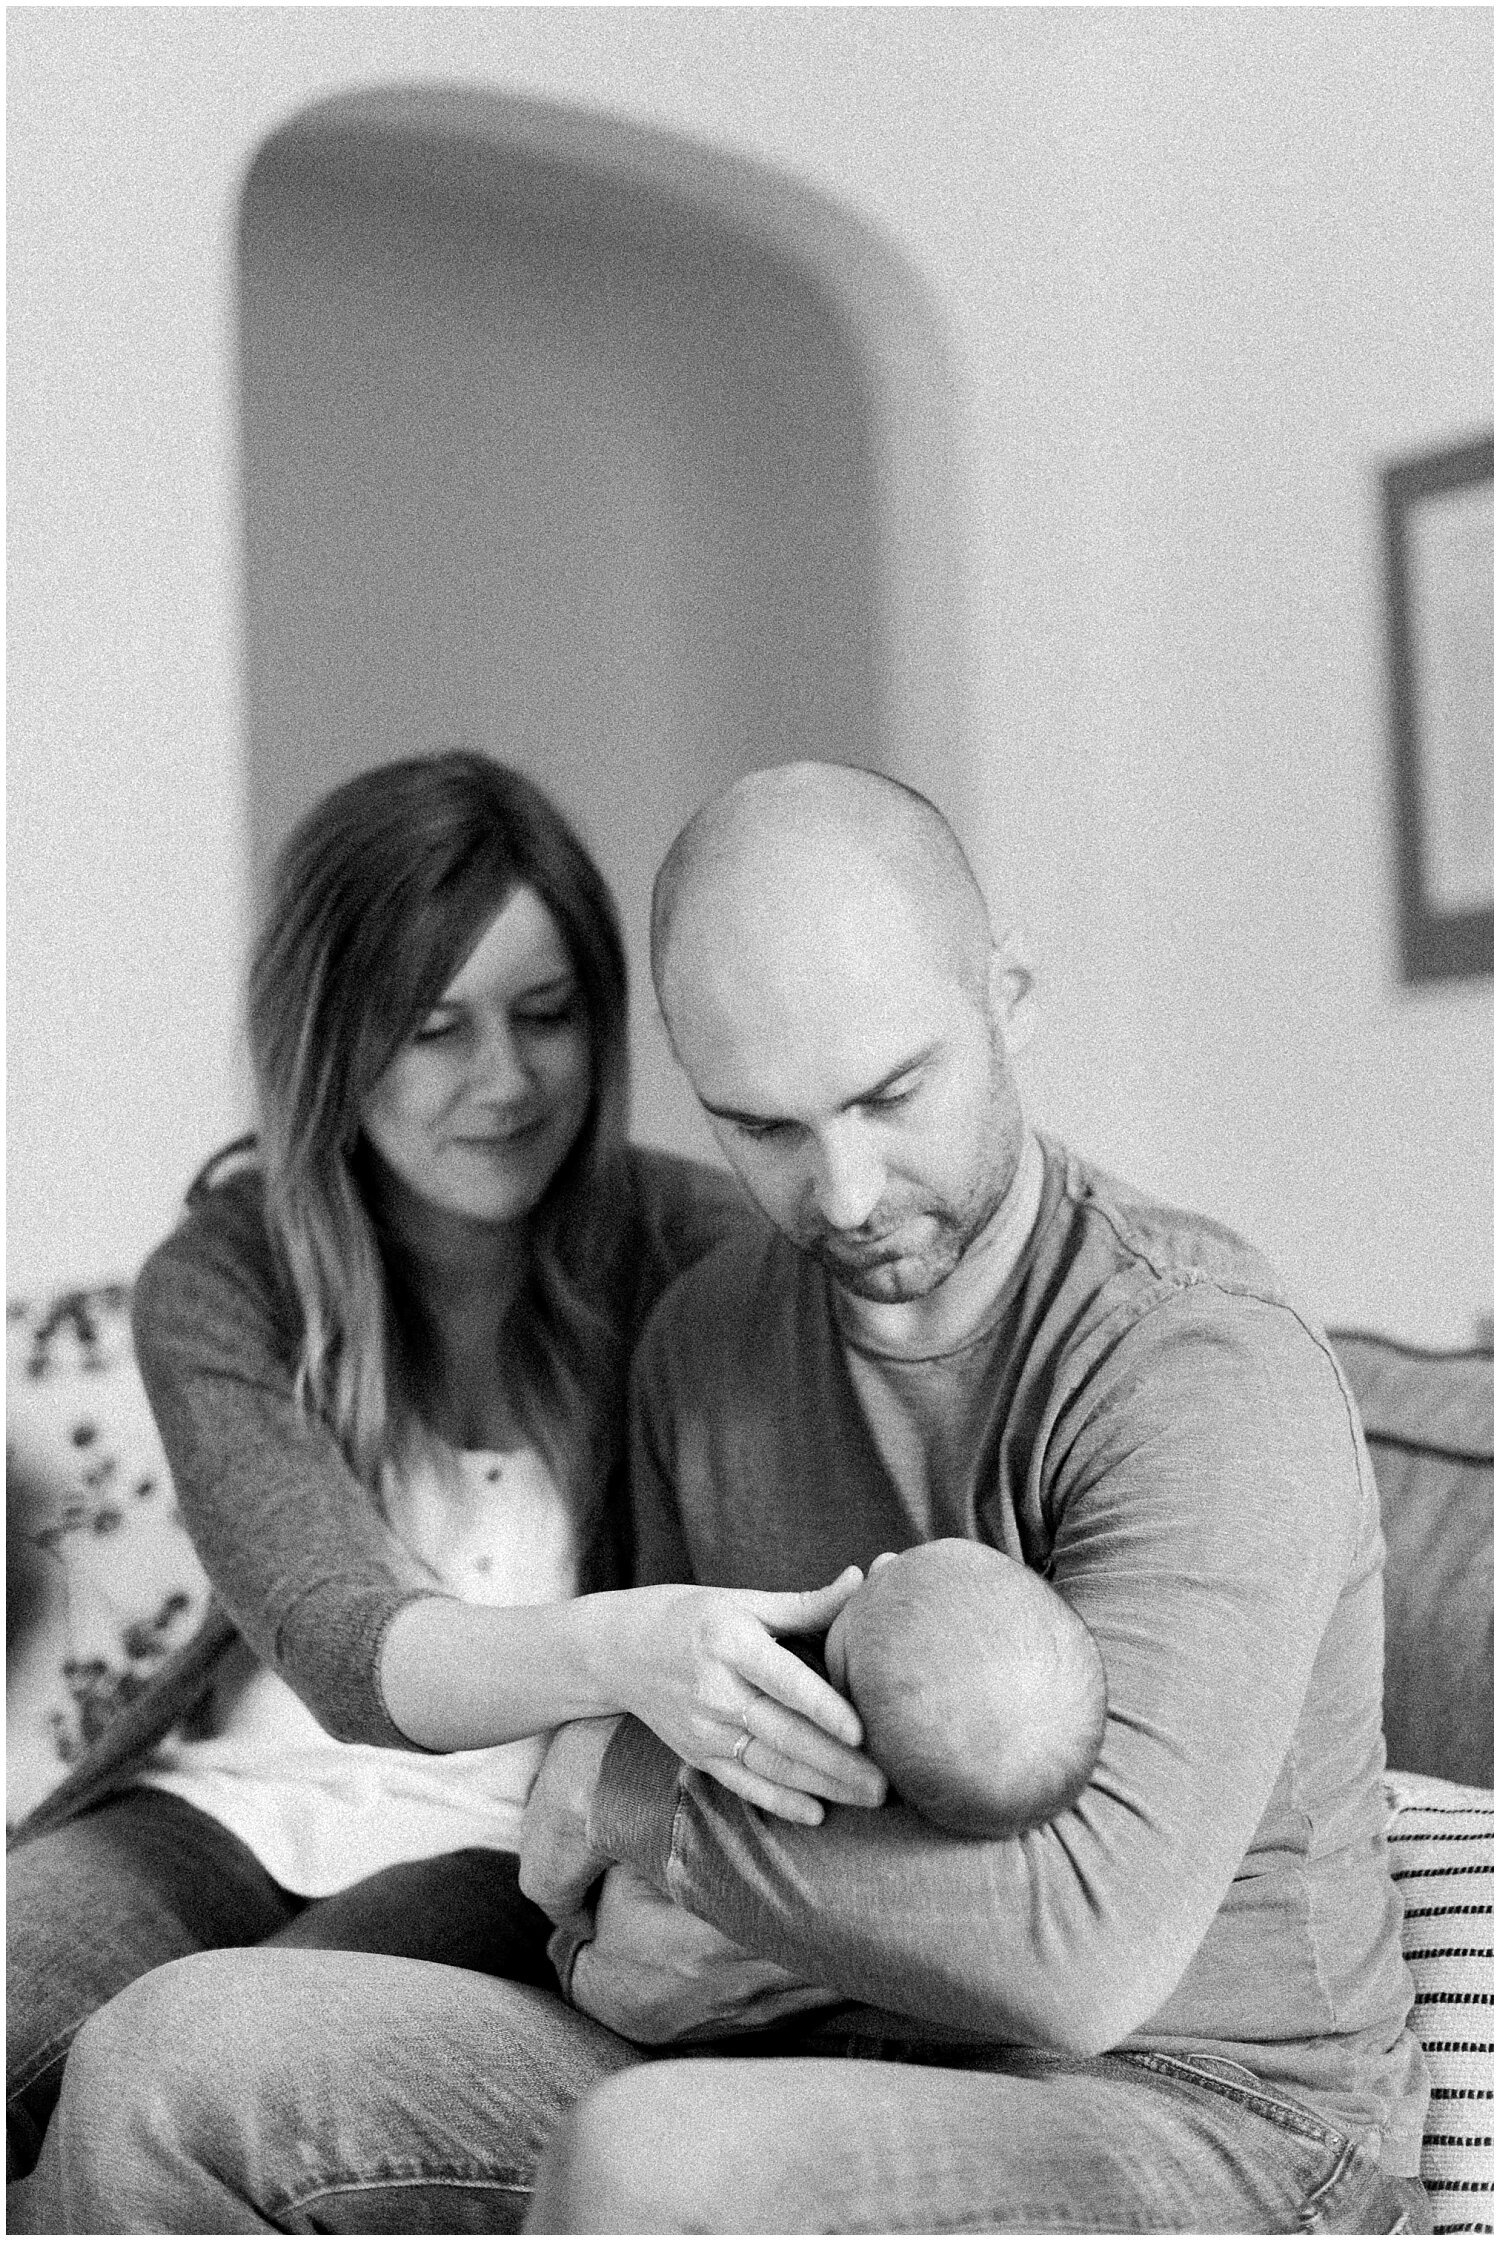 In-Home Newborn Family Portraits | Cincinnati, Ohio